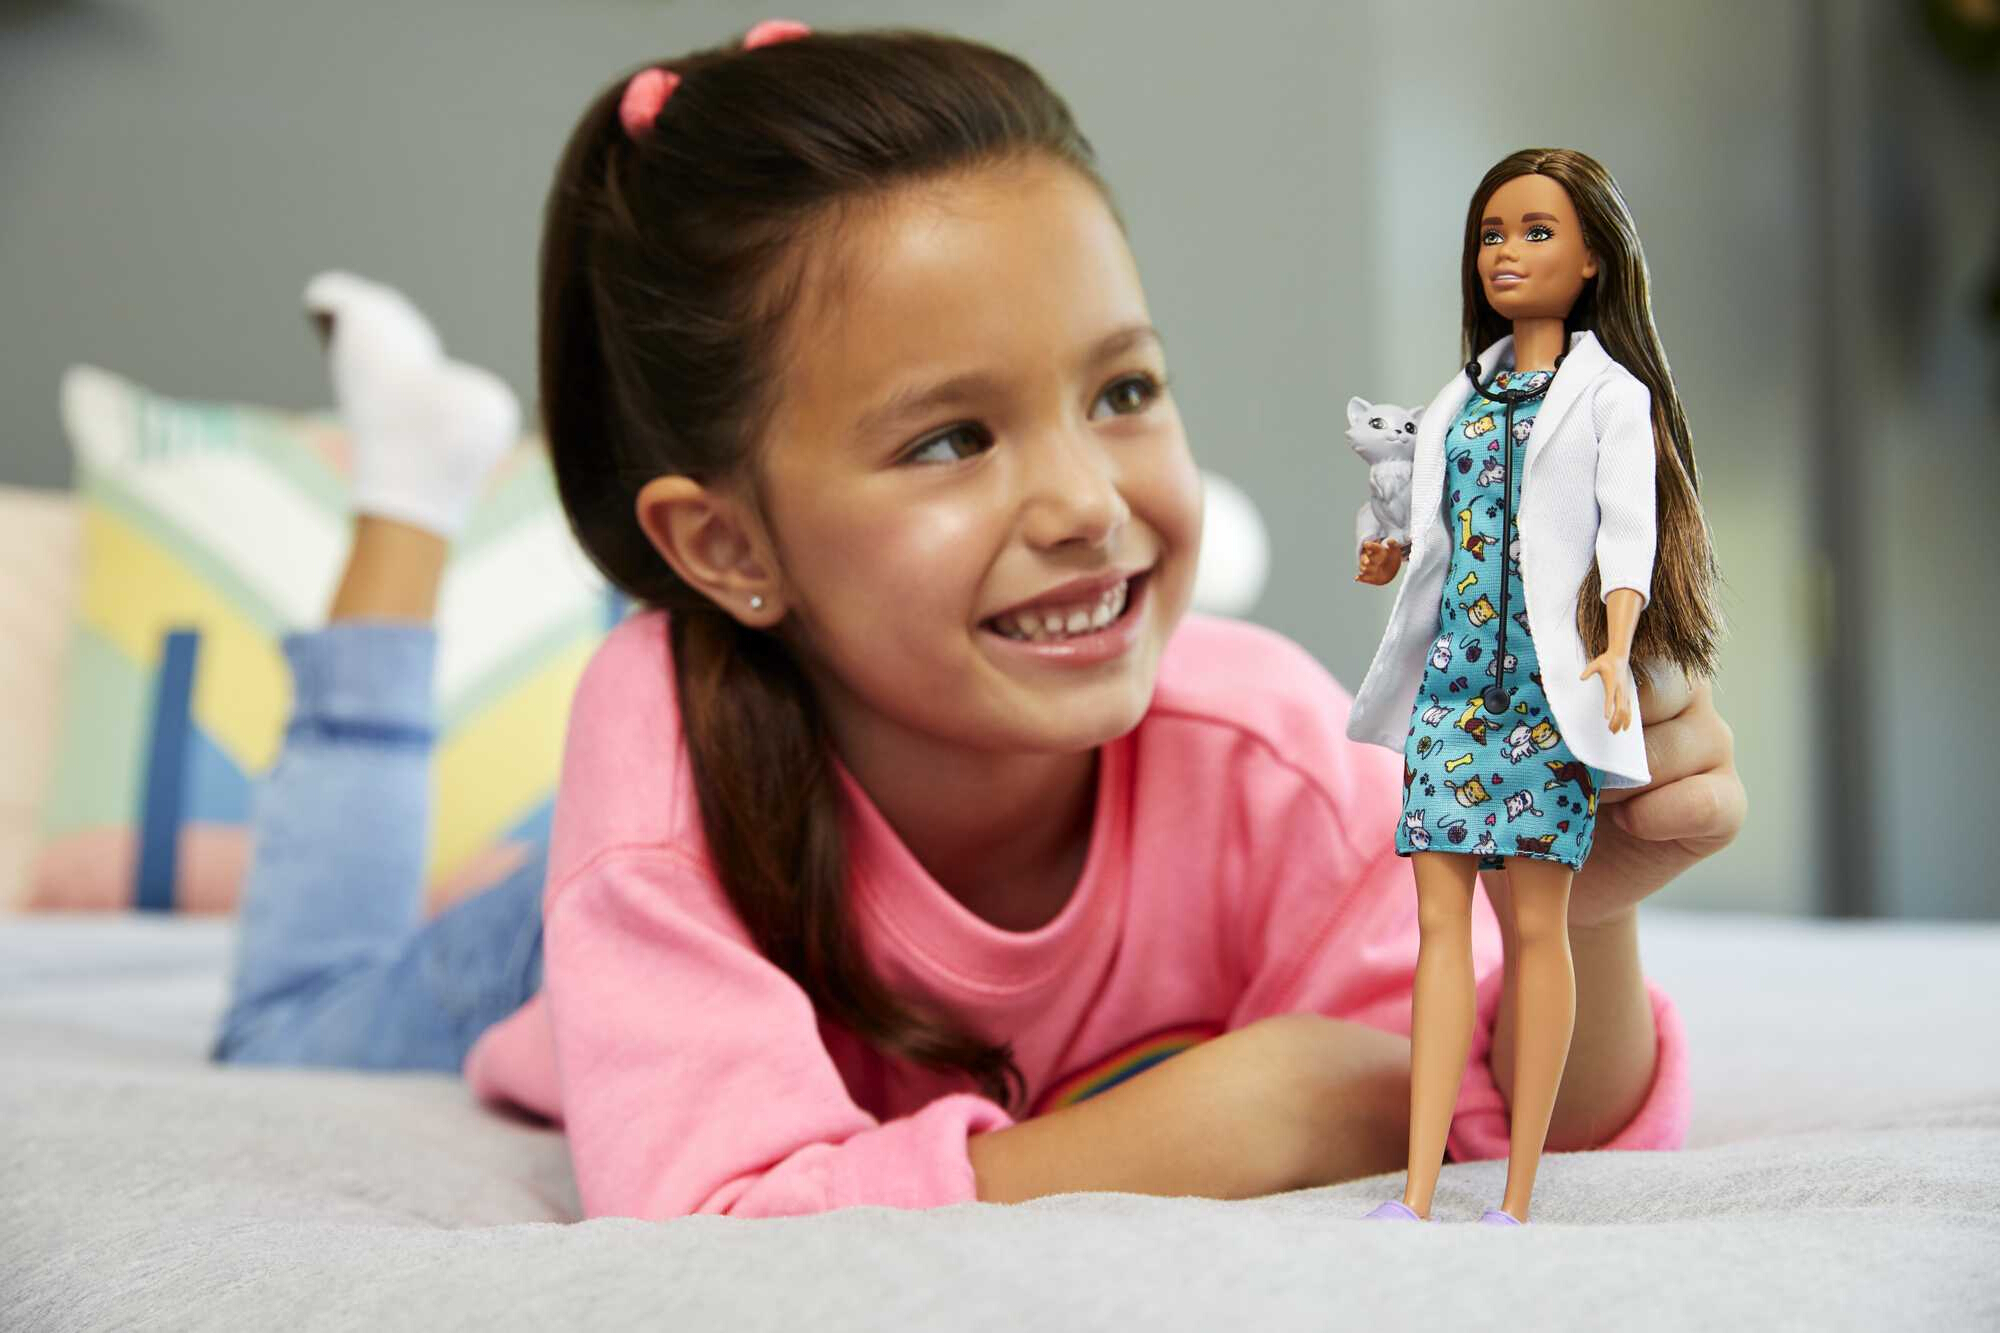 Barbie Pet Vet Fashion Doll Brunette with Medical Coat, Kitten Patient & Accessories - image 2 of 6